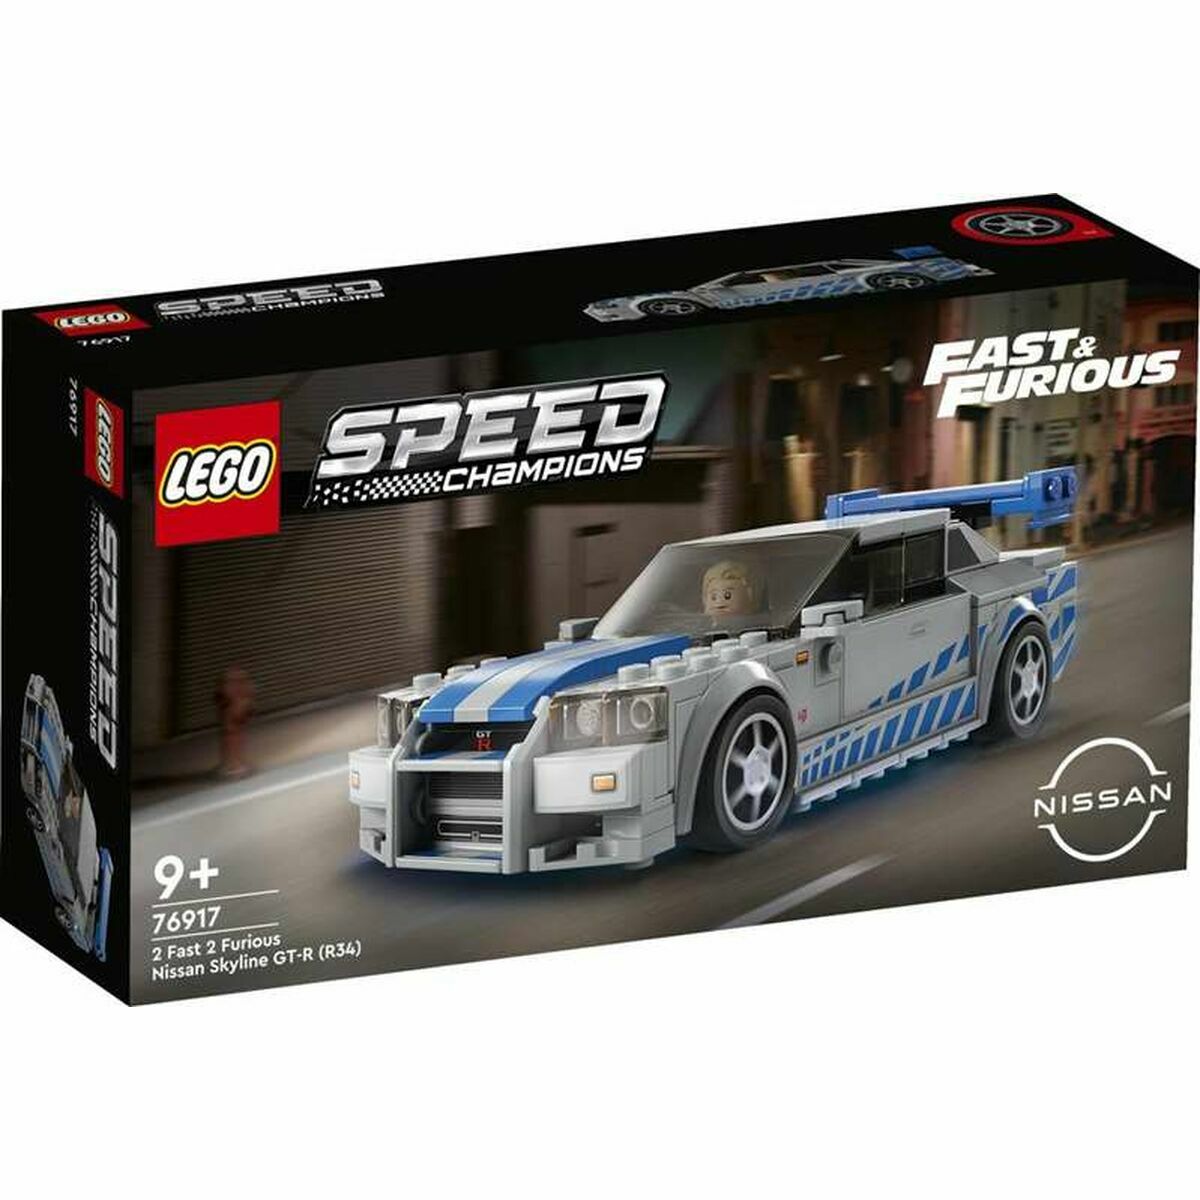 Playset Lego Fast and Furious: 76917 Nissan Skyline GT-R (R34) 319 Kappaletta